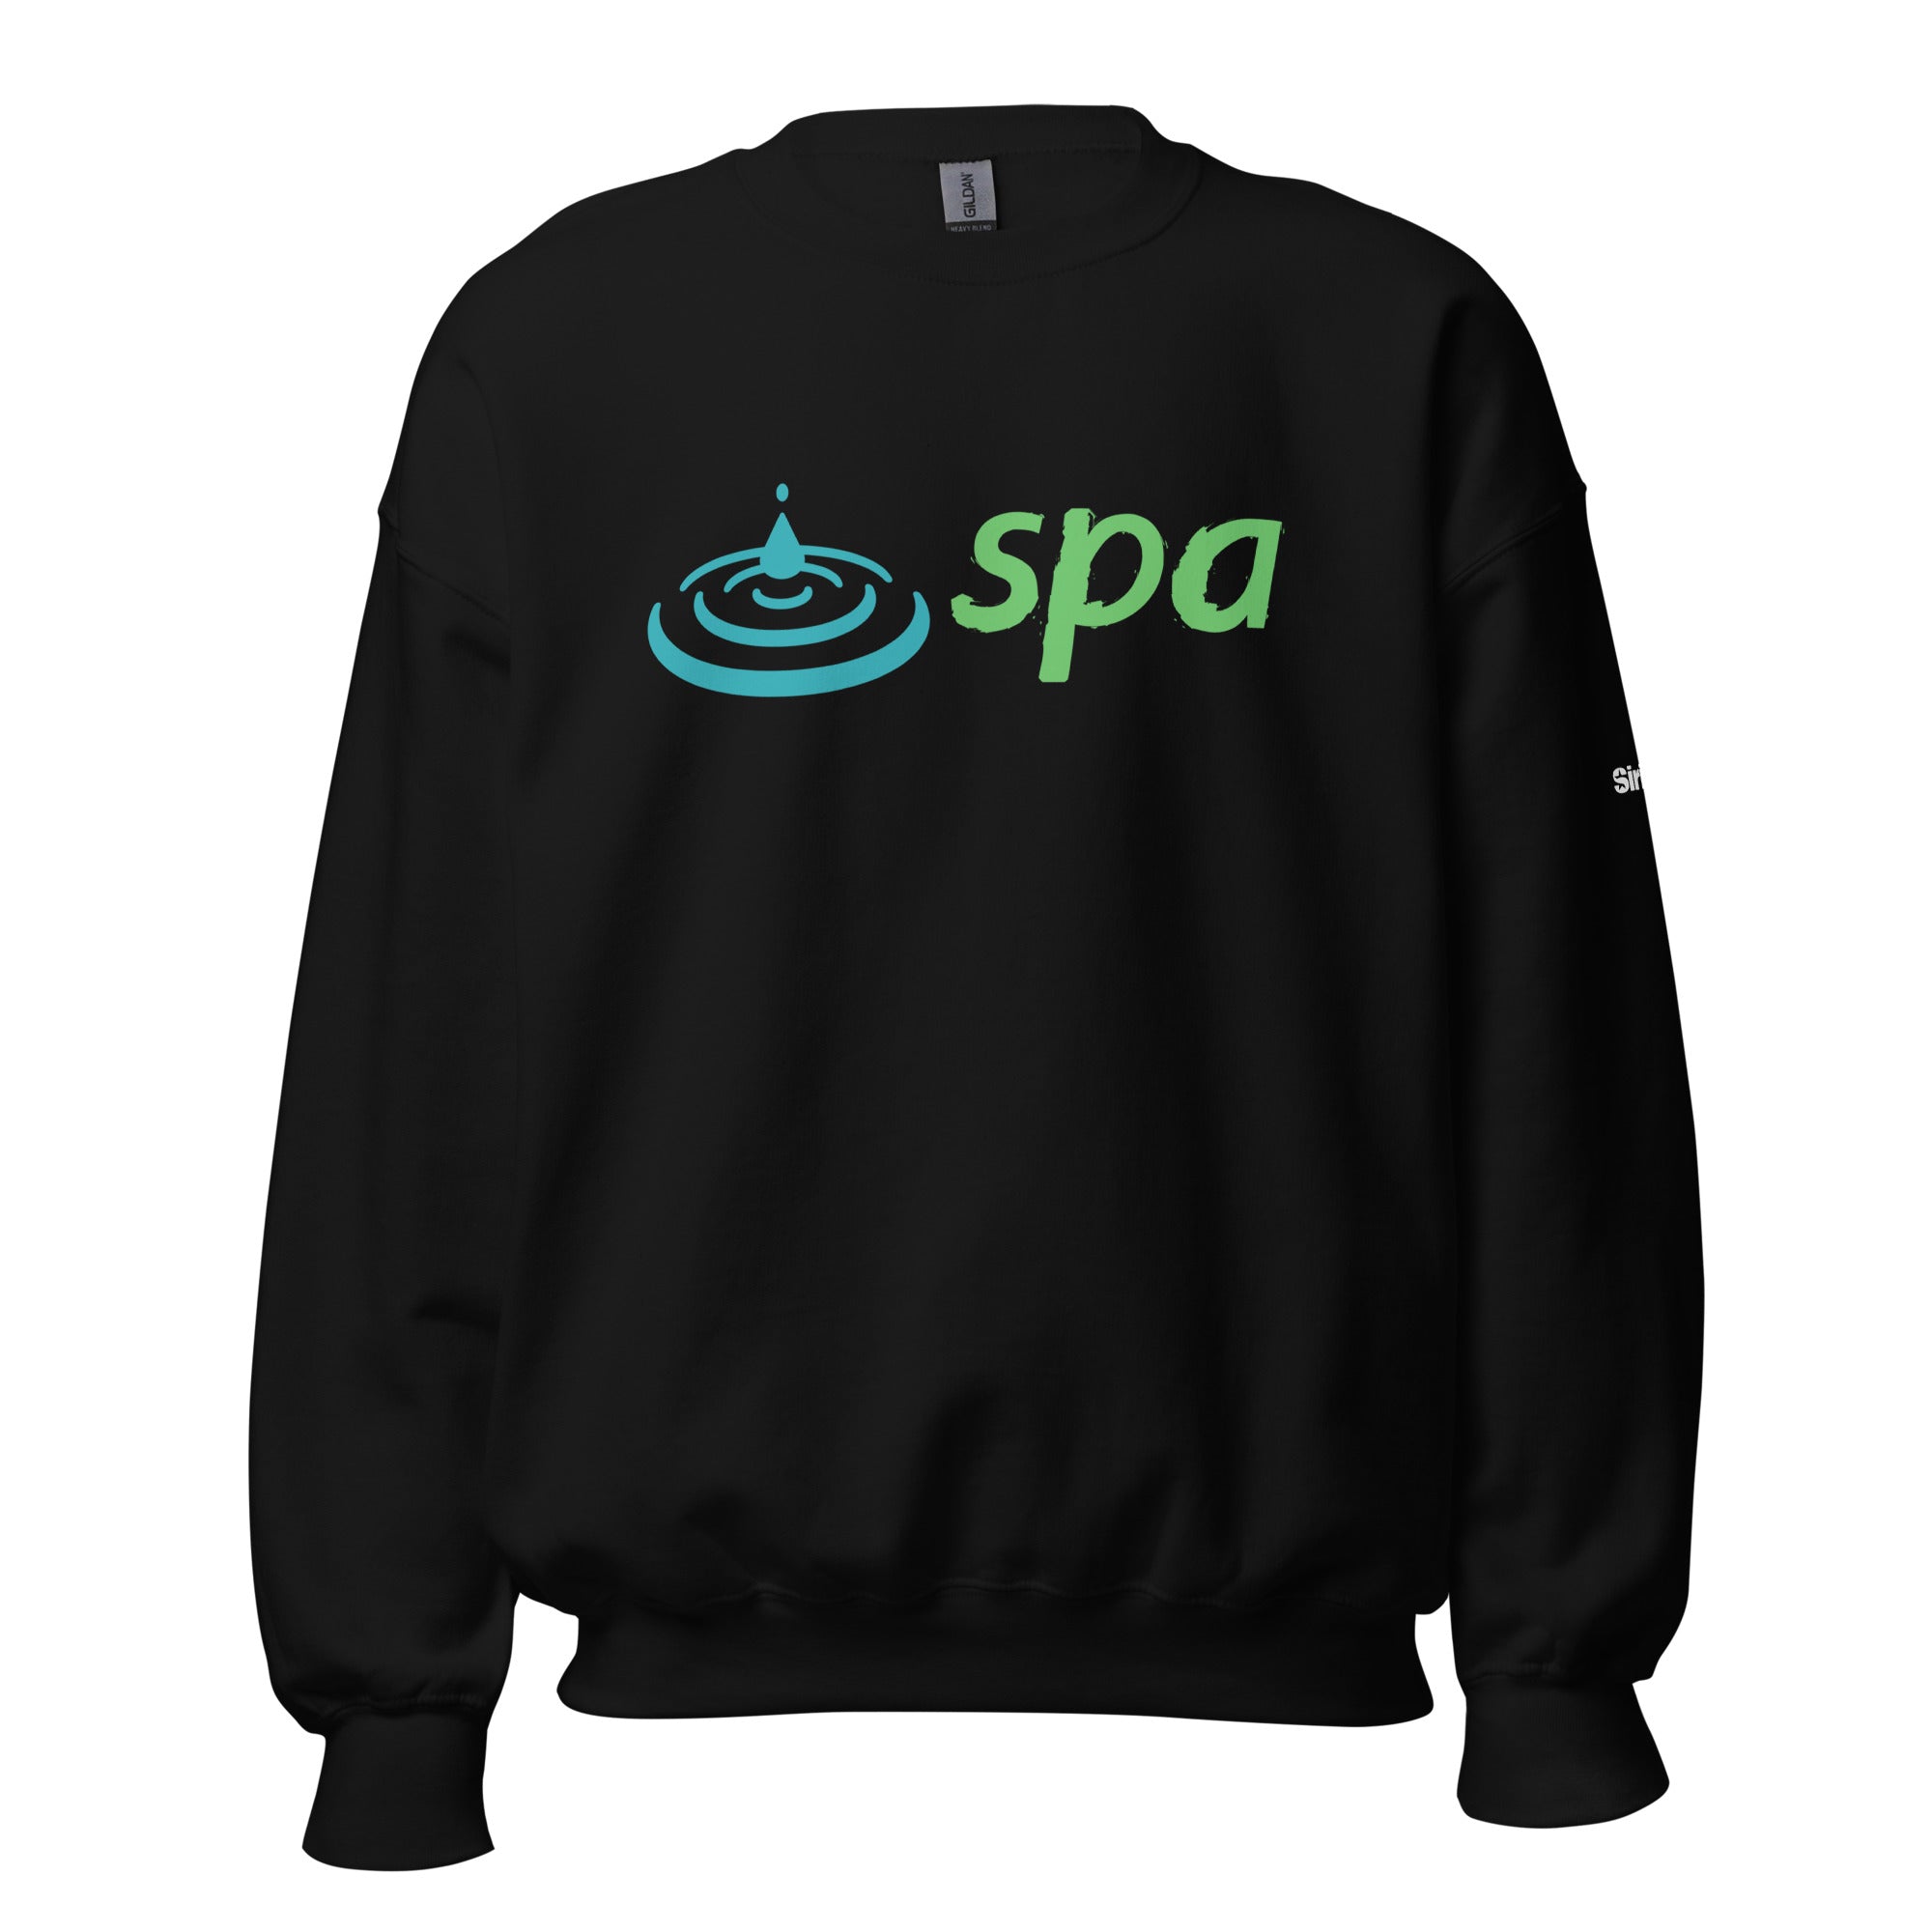 Spa: Sweatshirt (Black)